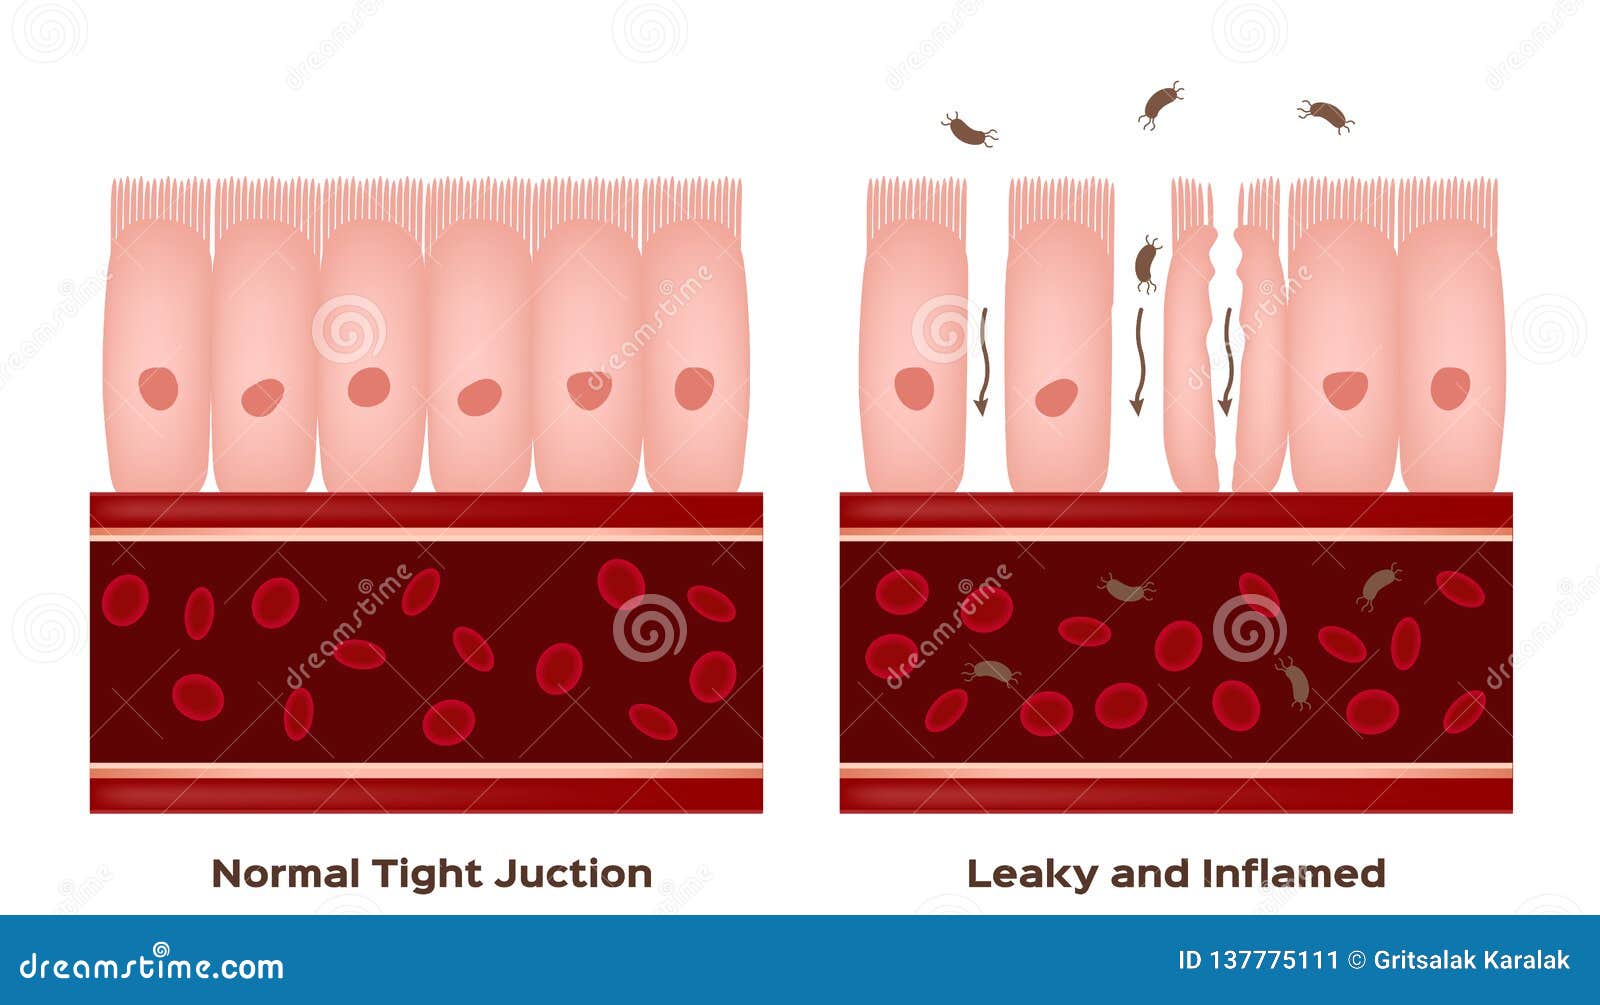 celiac disease small intestine lining damage. good and damaged villi . leaky gut progression